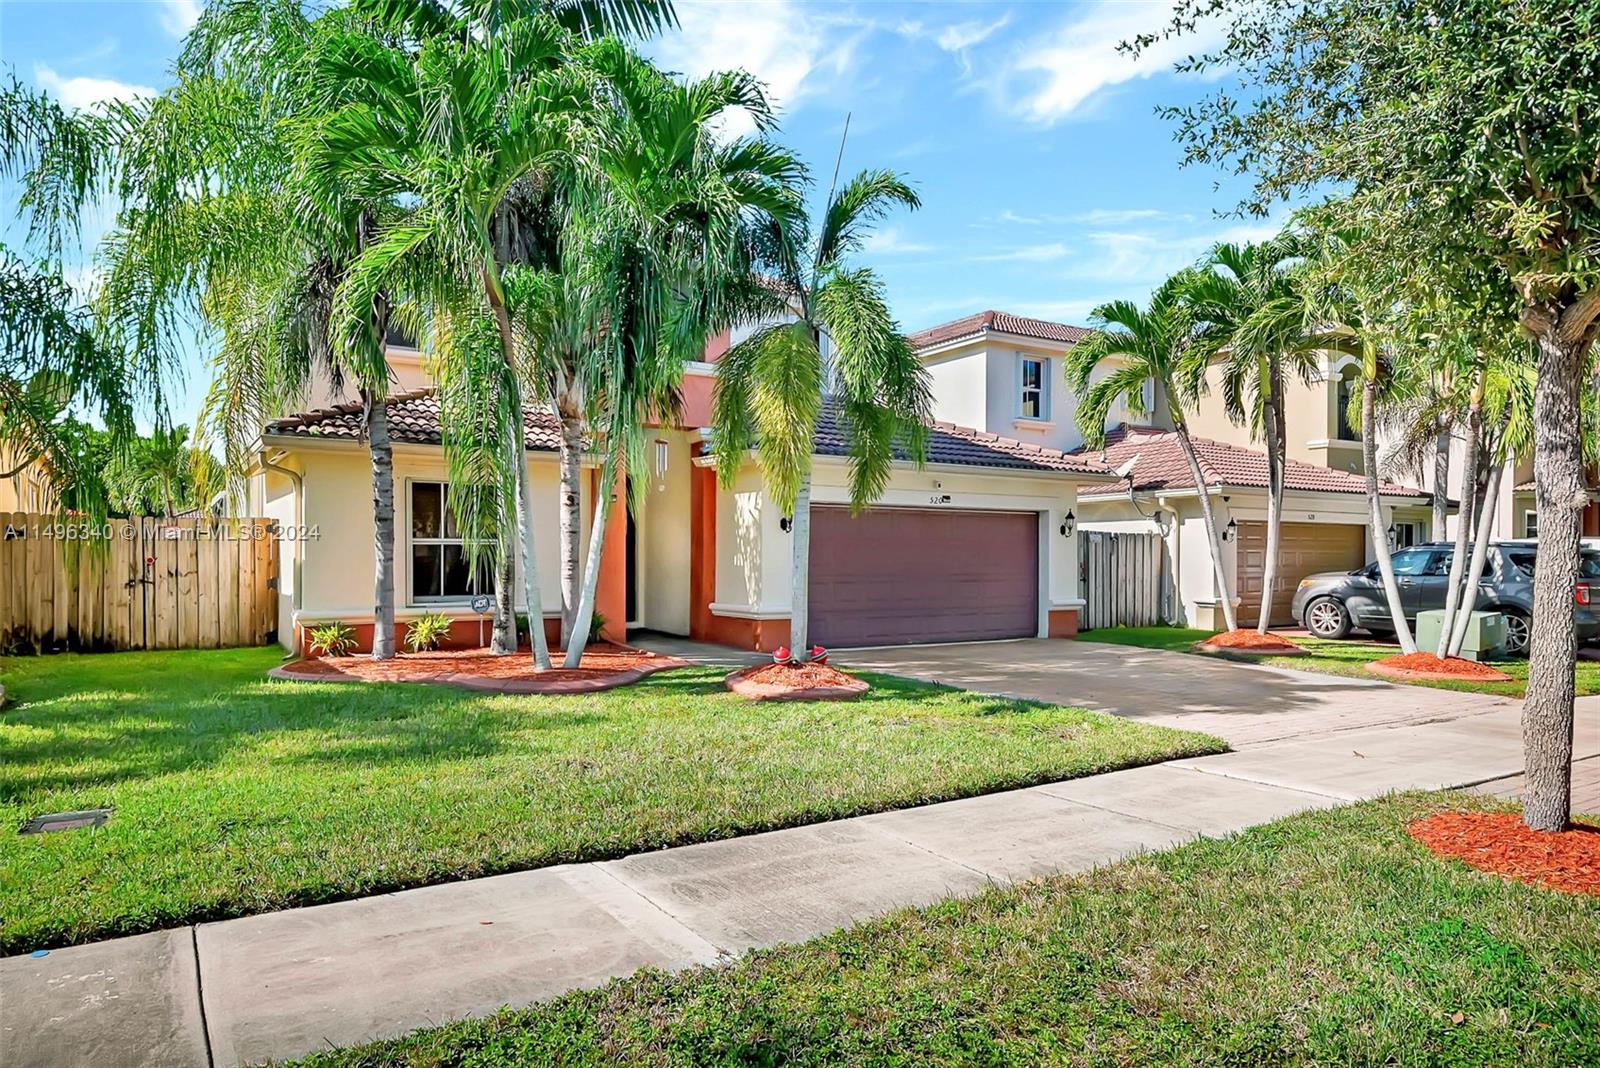 Property for Sale at 520 Ne 20 Terr Ter, Homestead, Miami-Dade County, Florida - Bedrooms: 5 
Bathrooms: 3  - $630,000